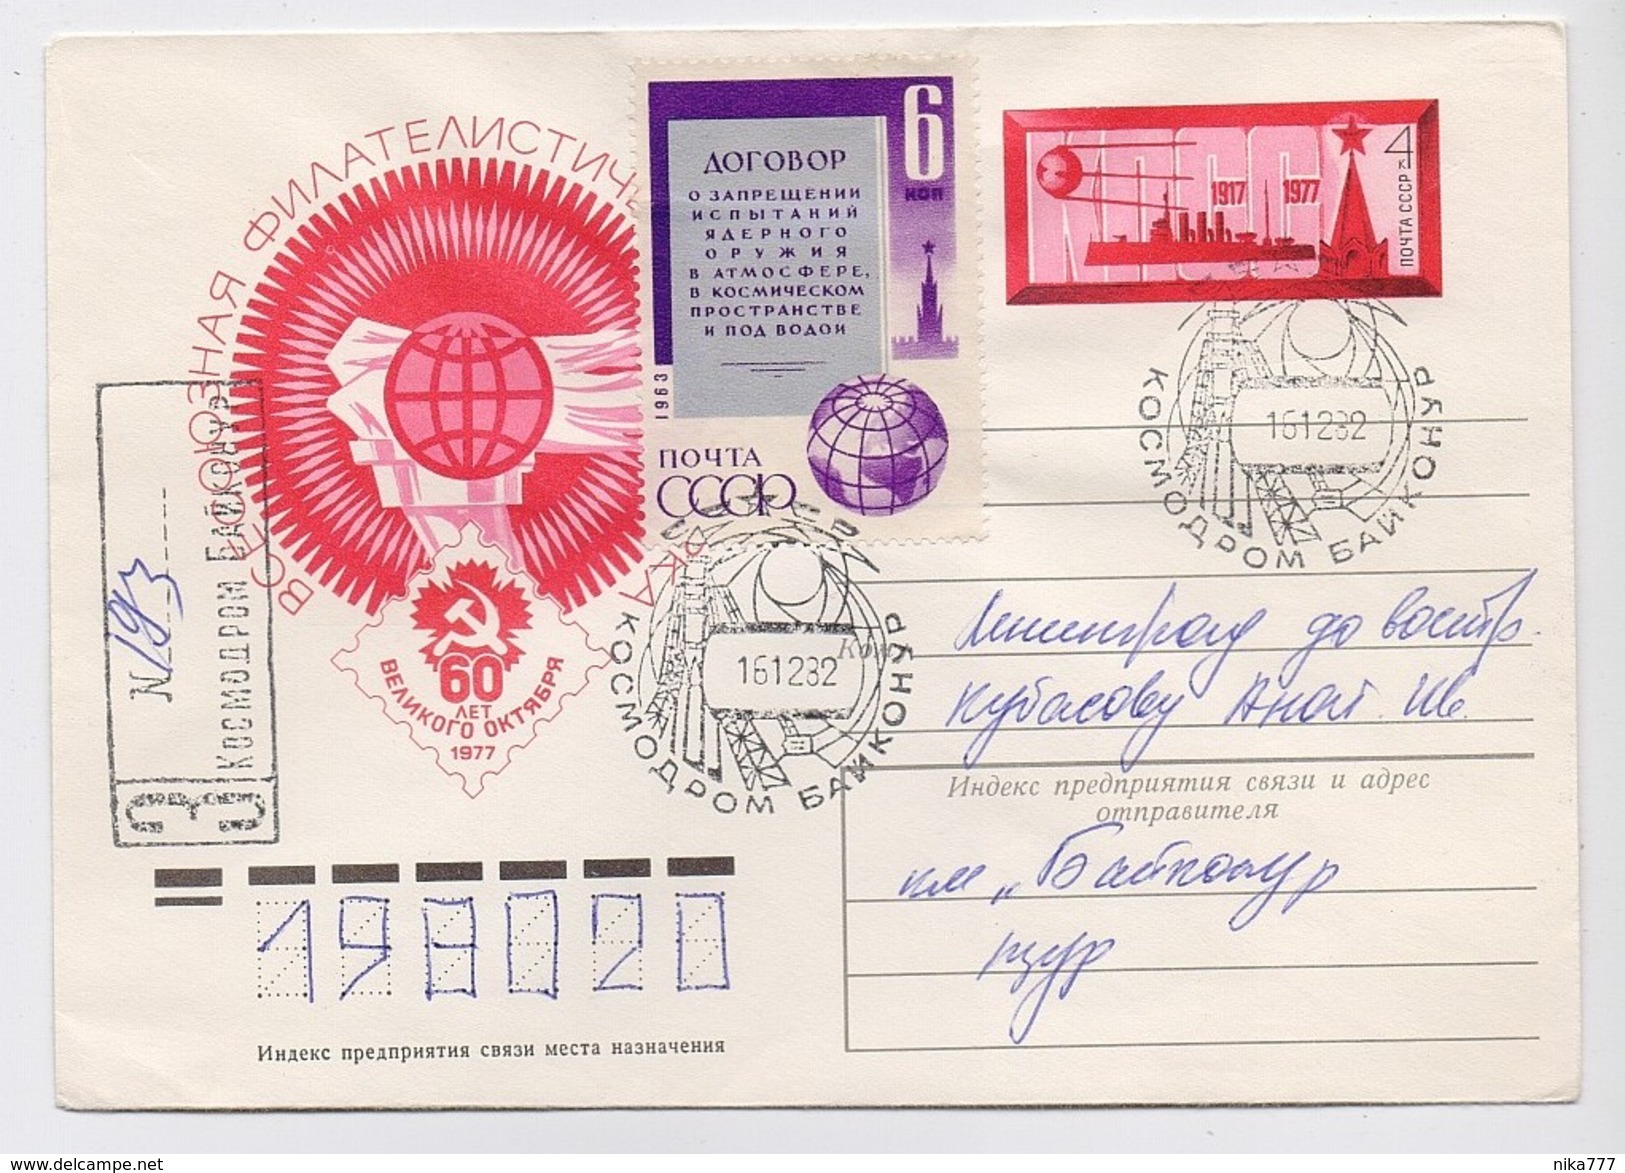 SPACE Mail Used Cover Stationery USSR RUSSIA Baikonur Baikonour COSMOS-1424 Rocket Sputnik - UdSSR